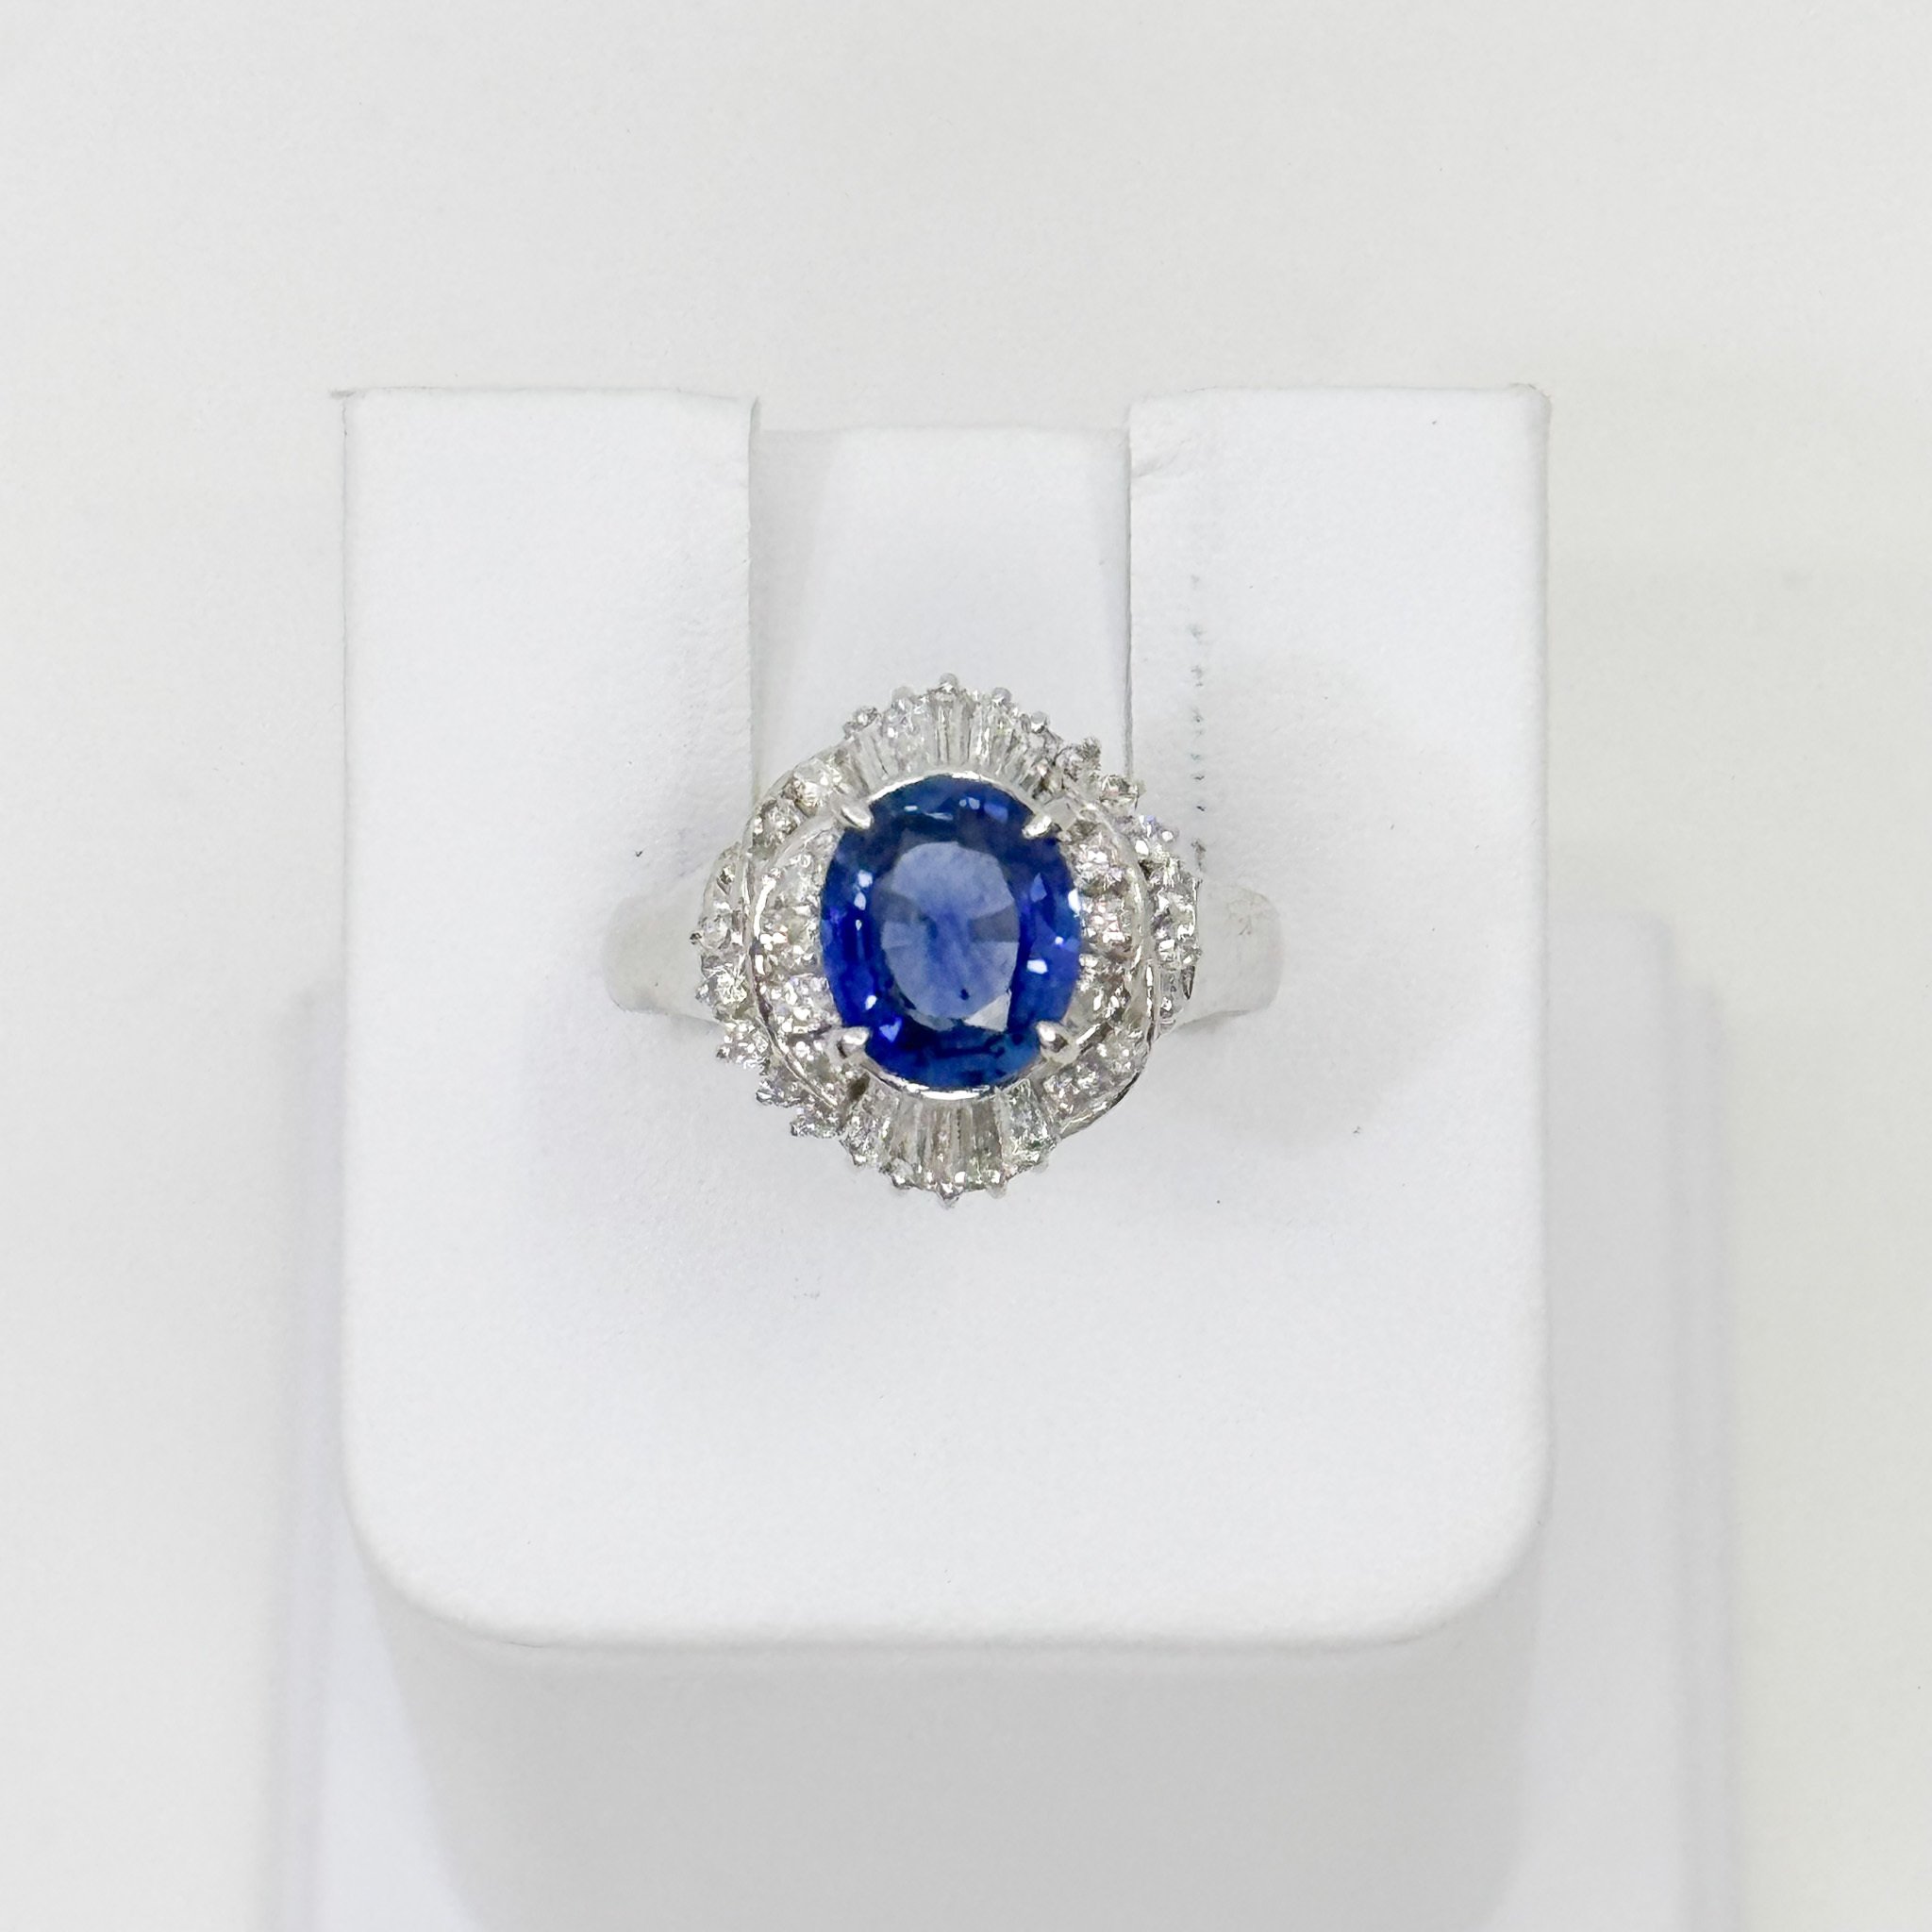 Platinum, Sapphire and Diamond Ring, sapphire 1.78ct, diamond 0.50ct